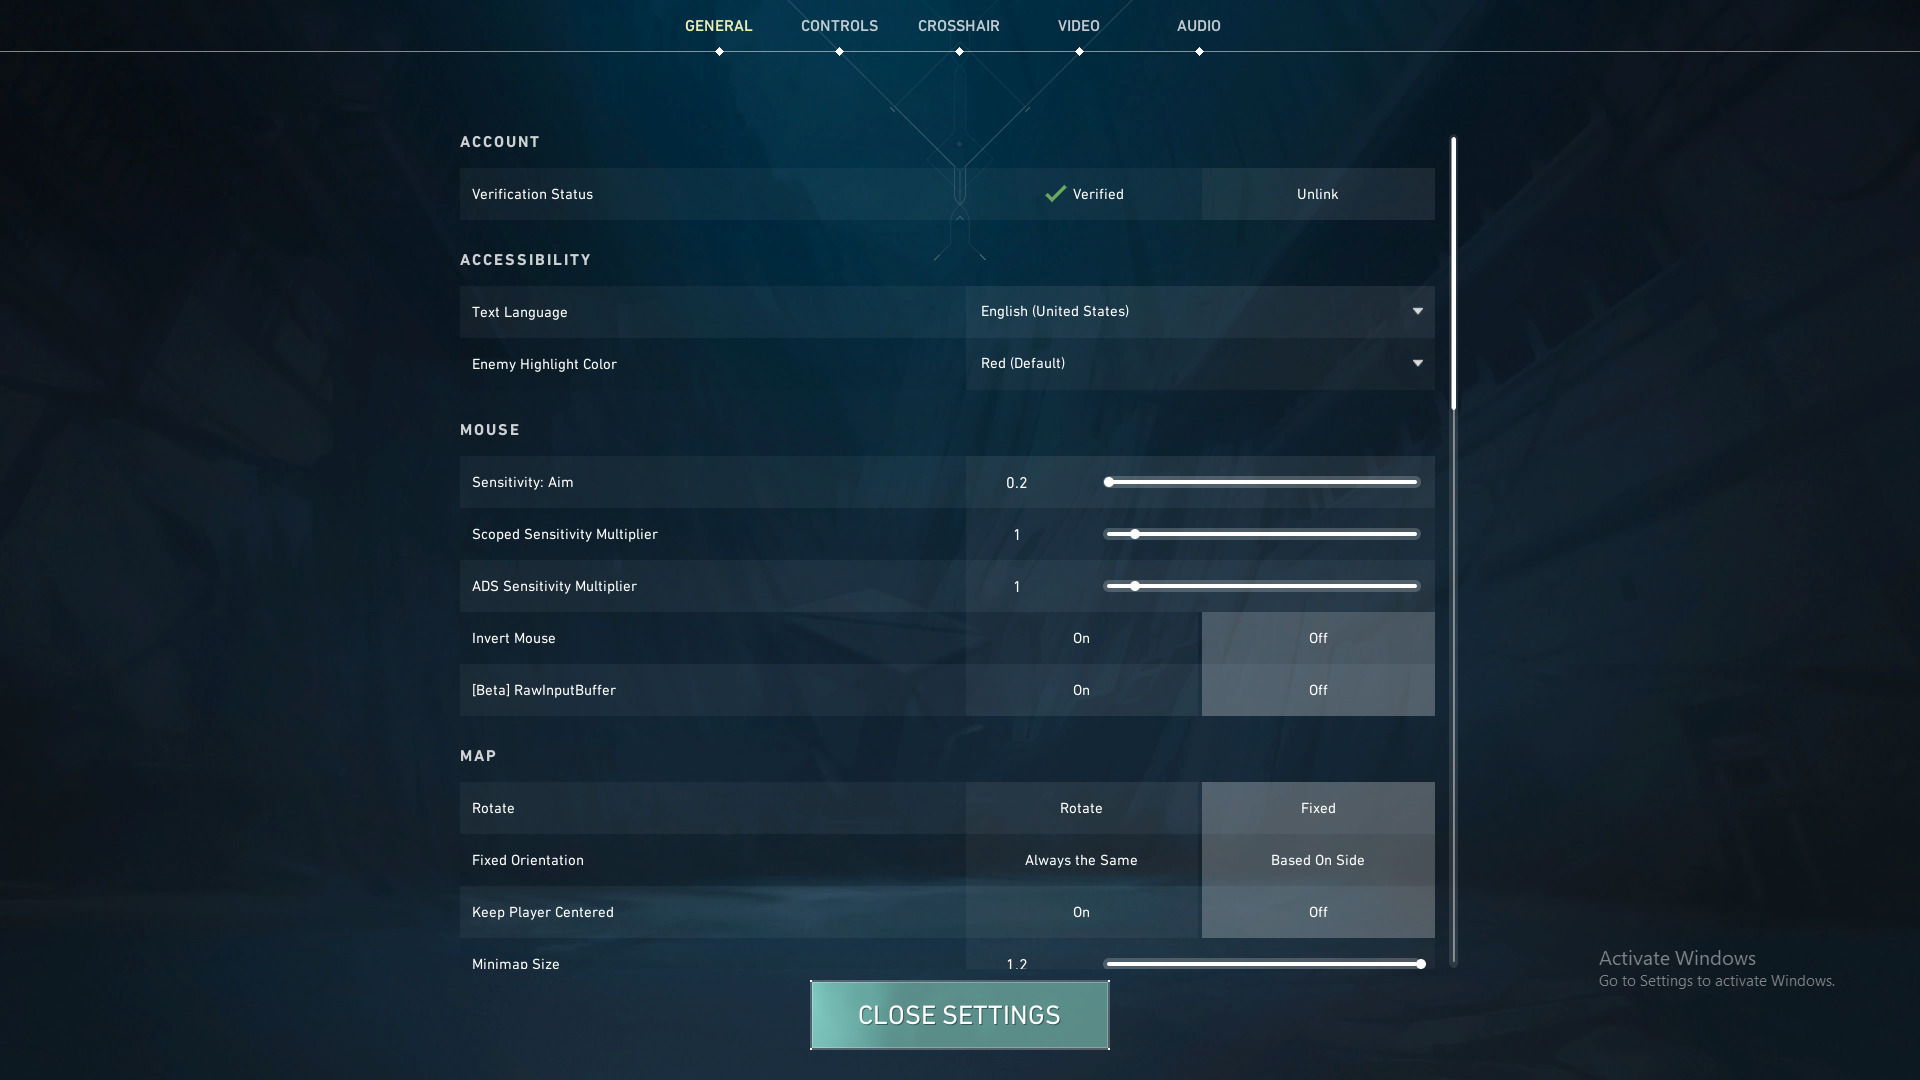 A screenshot showing the settings menu in Valorant